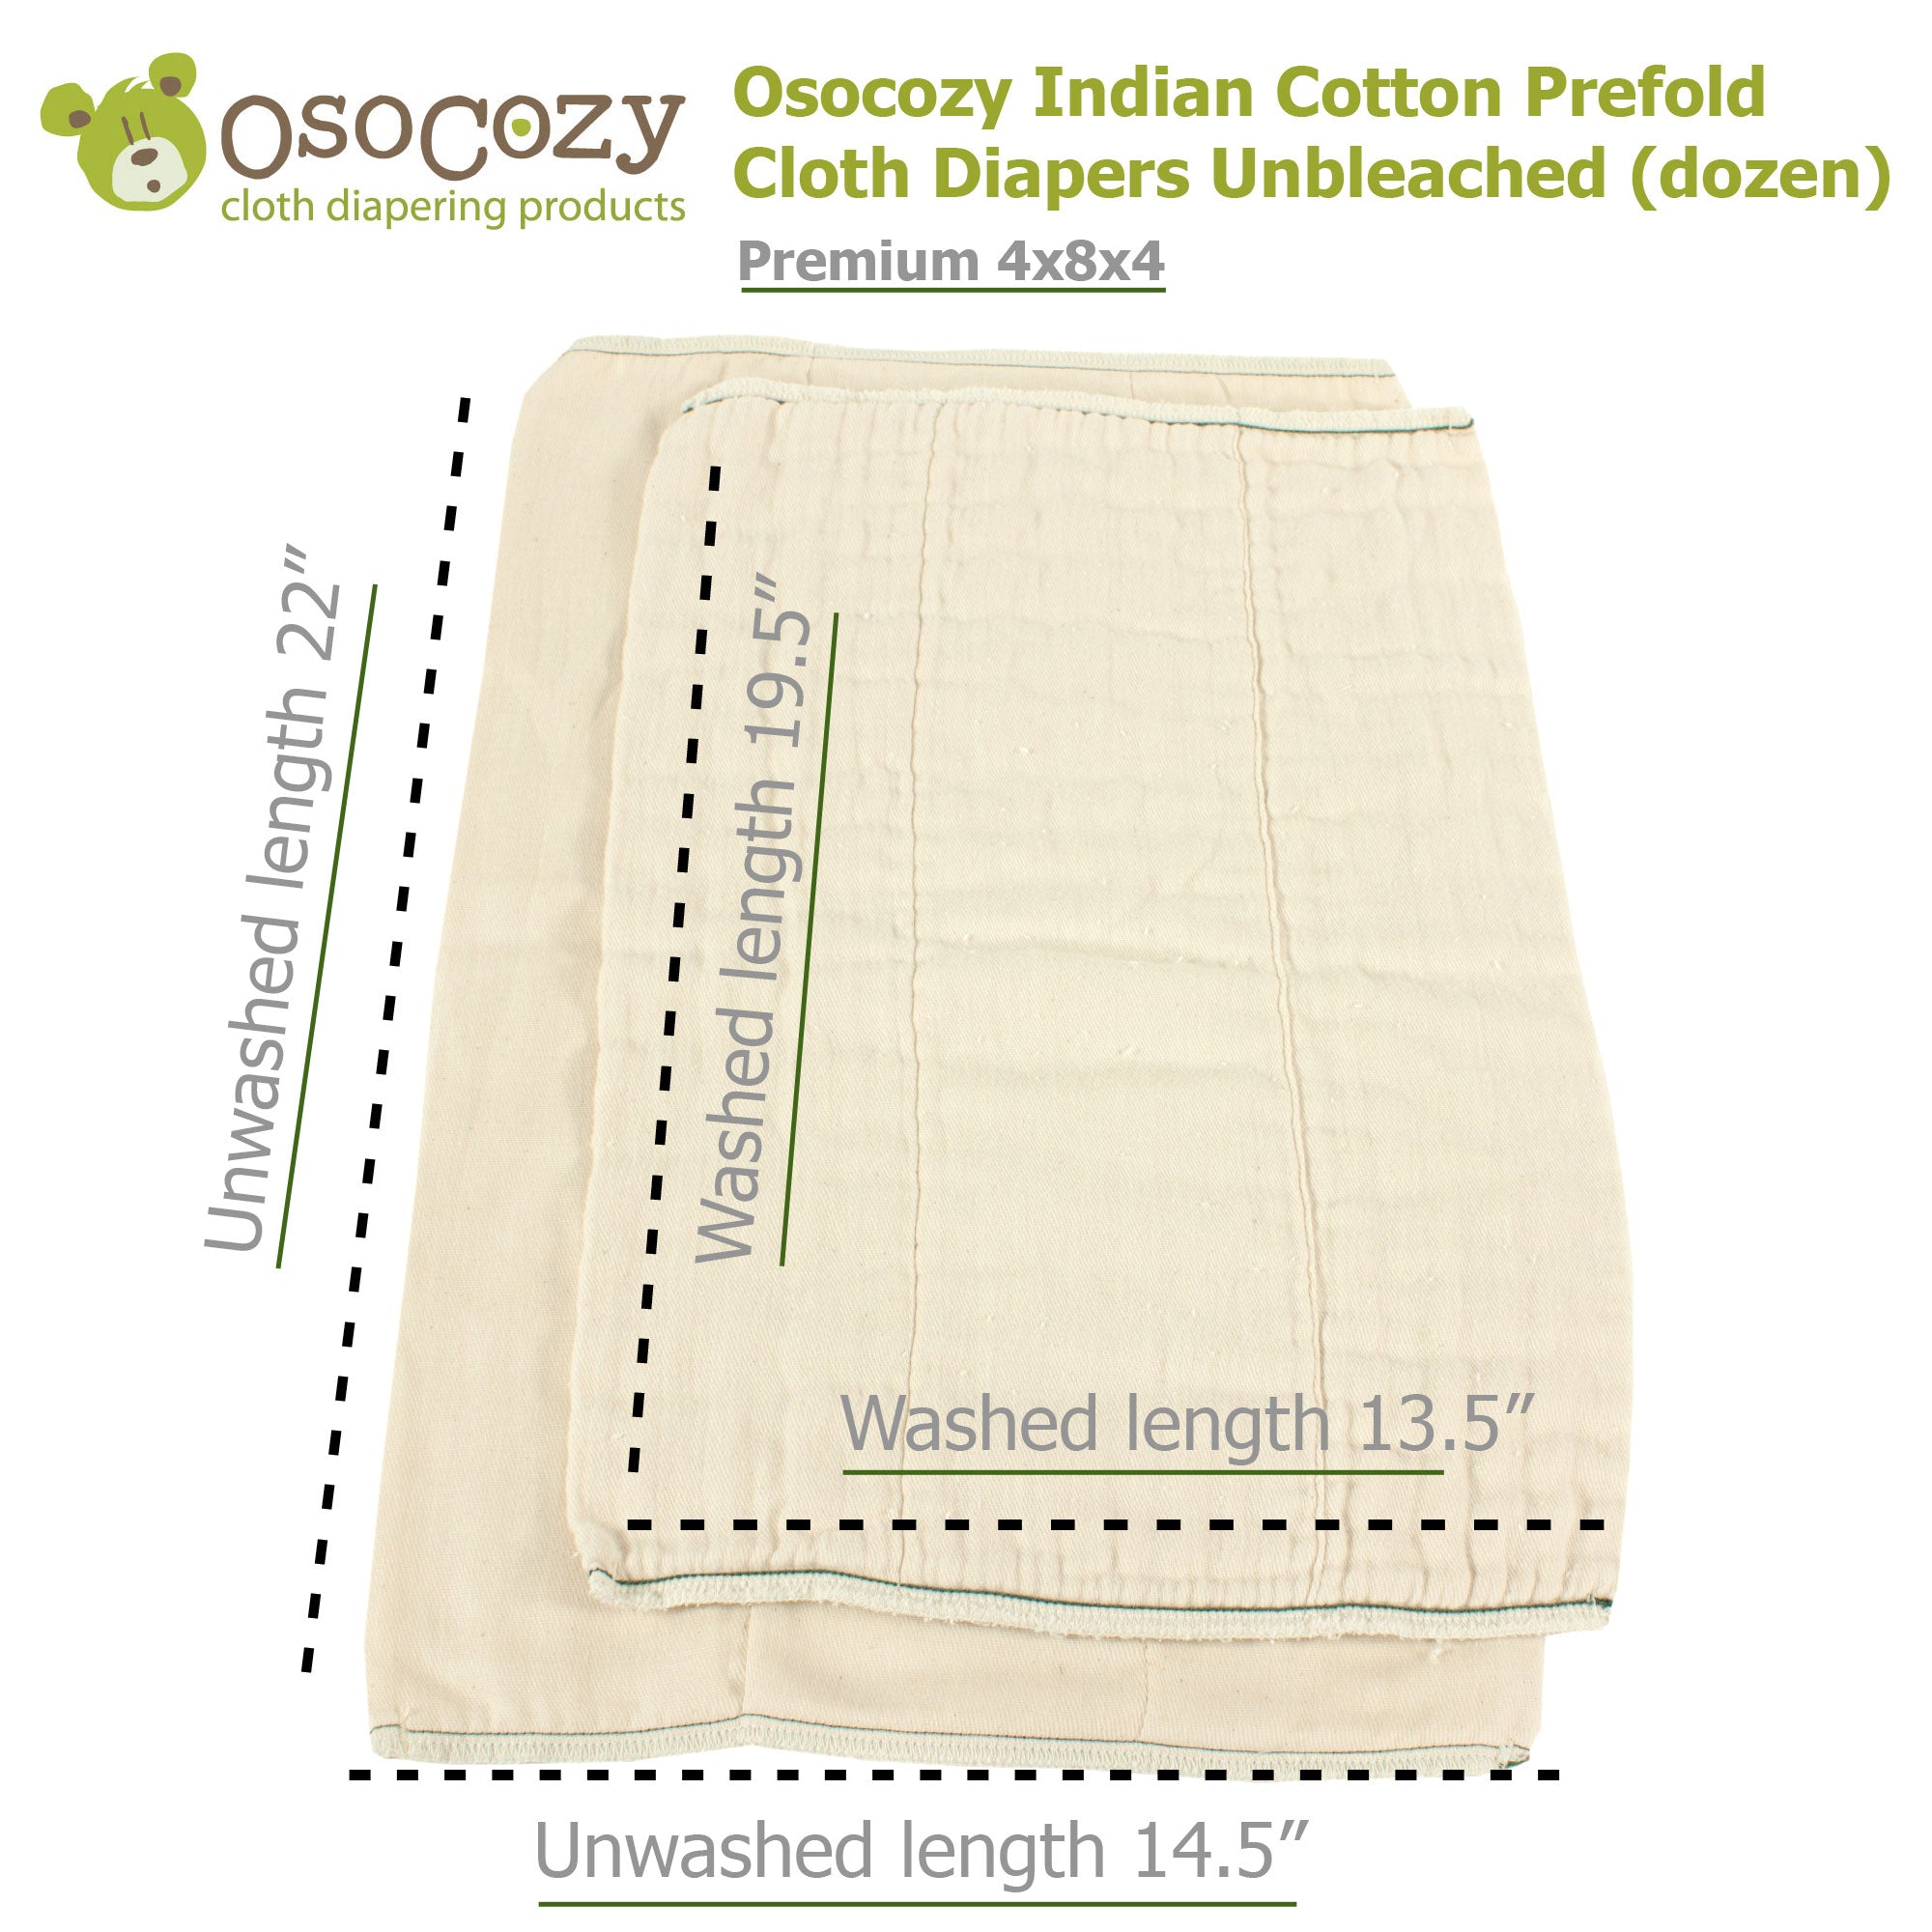 Osocozy Indian Cotton Prefold Cloth Diapers Unbleached (dozen)